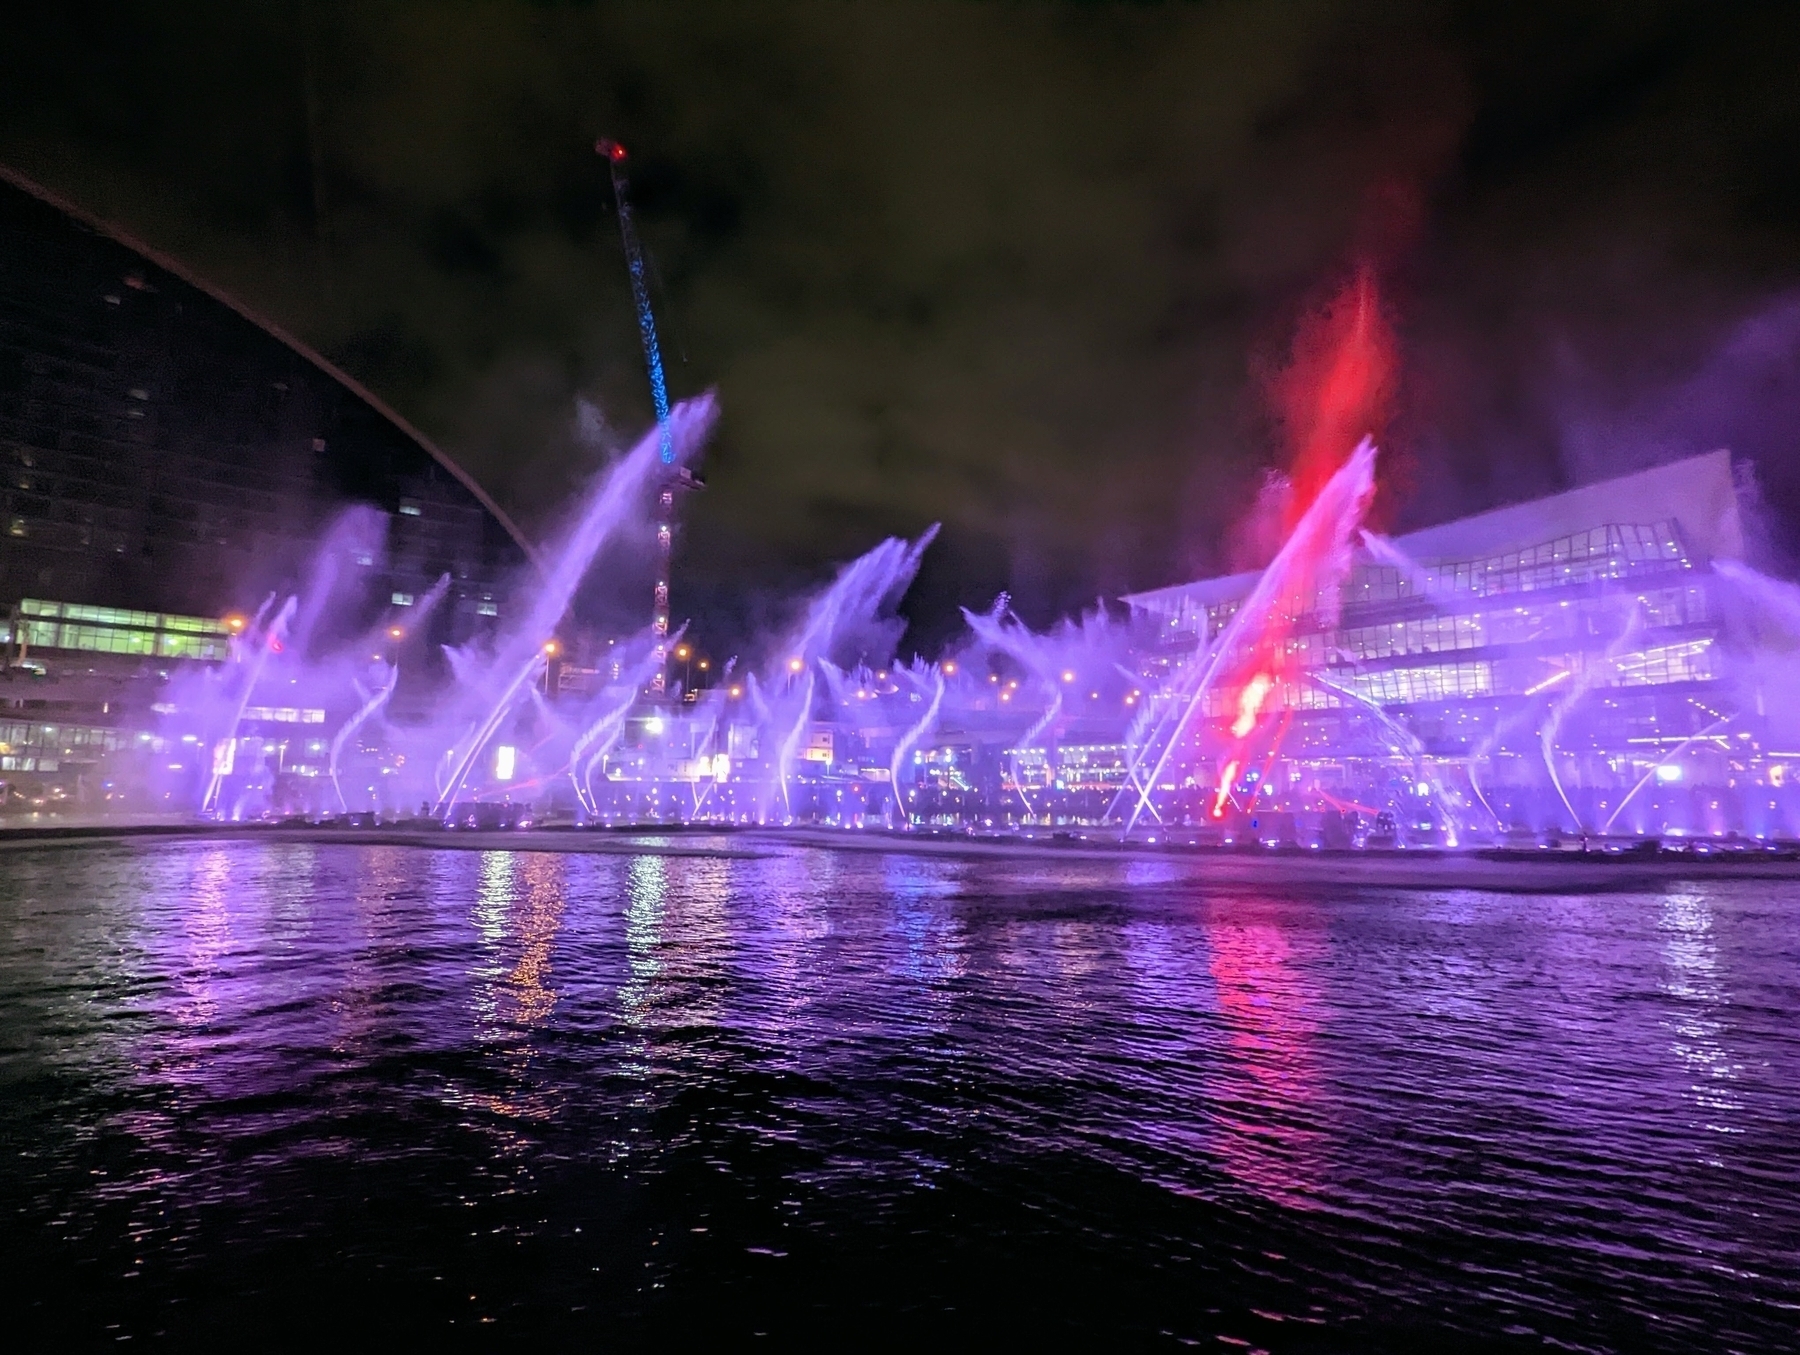 Huge jets of water lit up in purple at Darling Harbour, Sydney. 